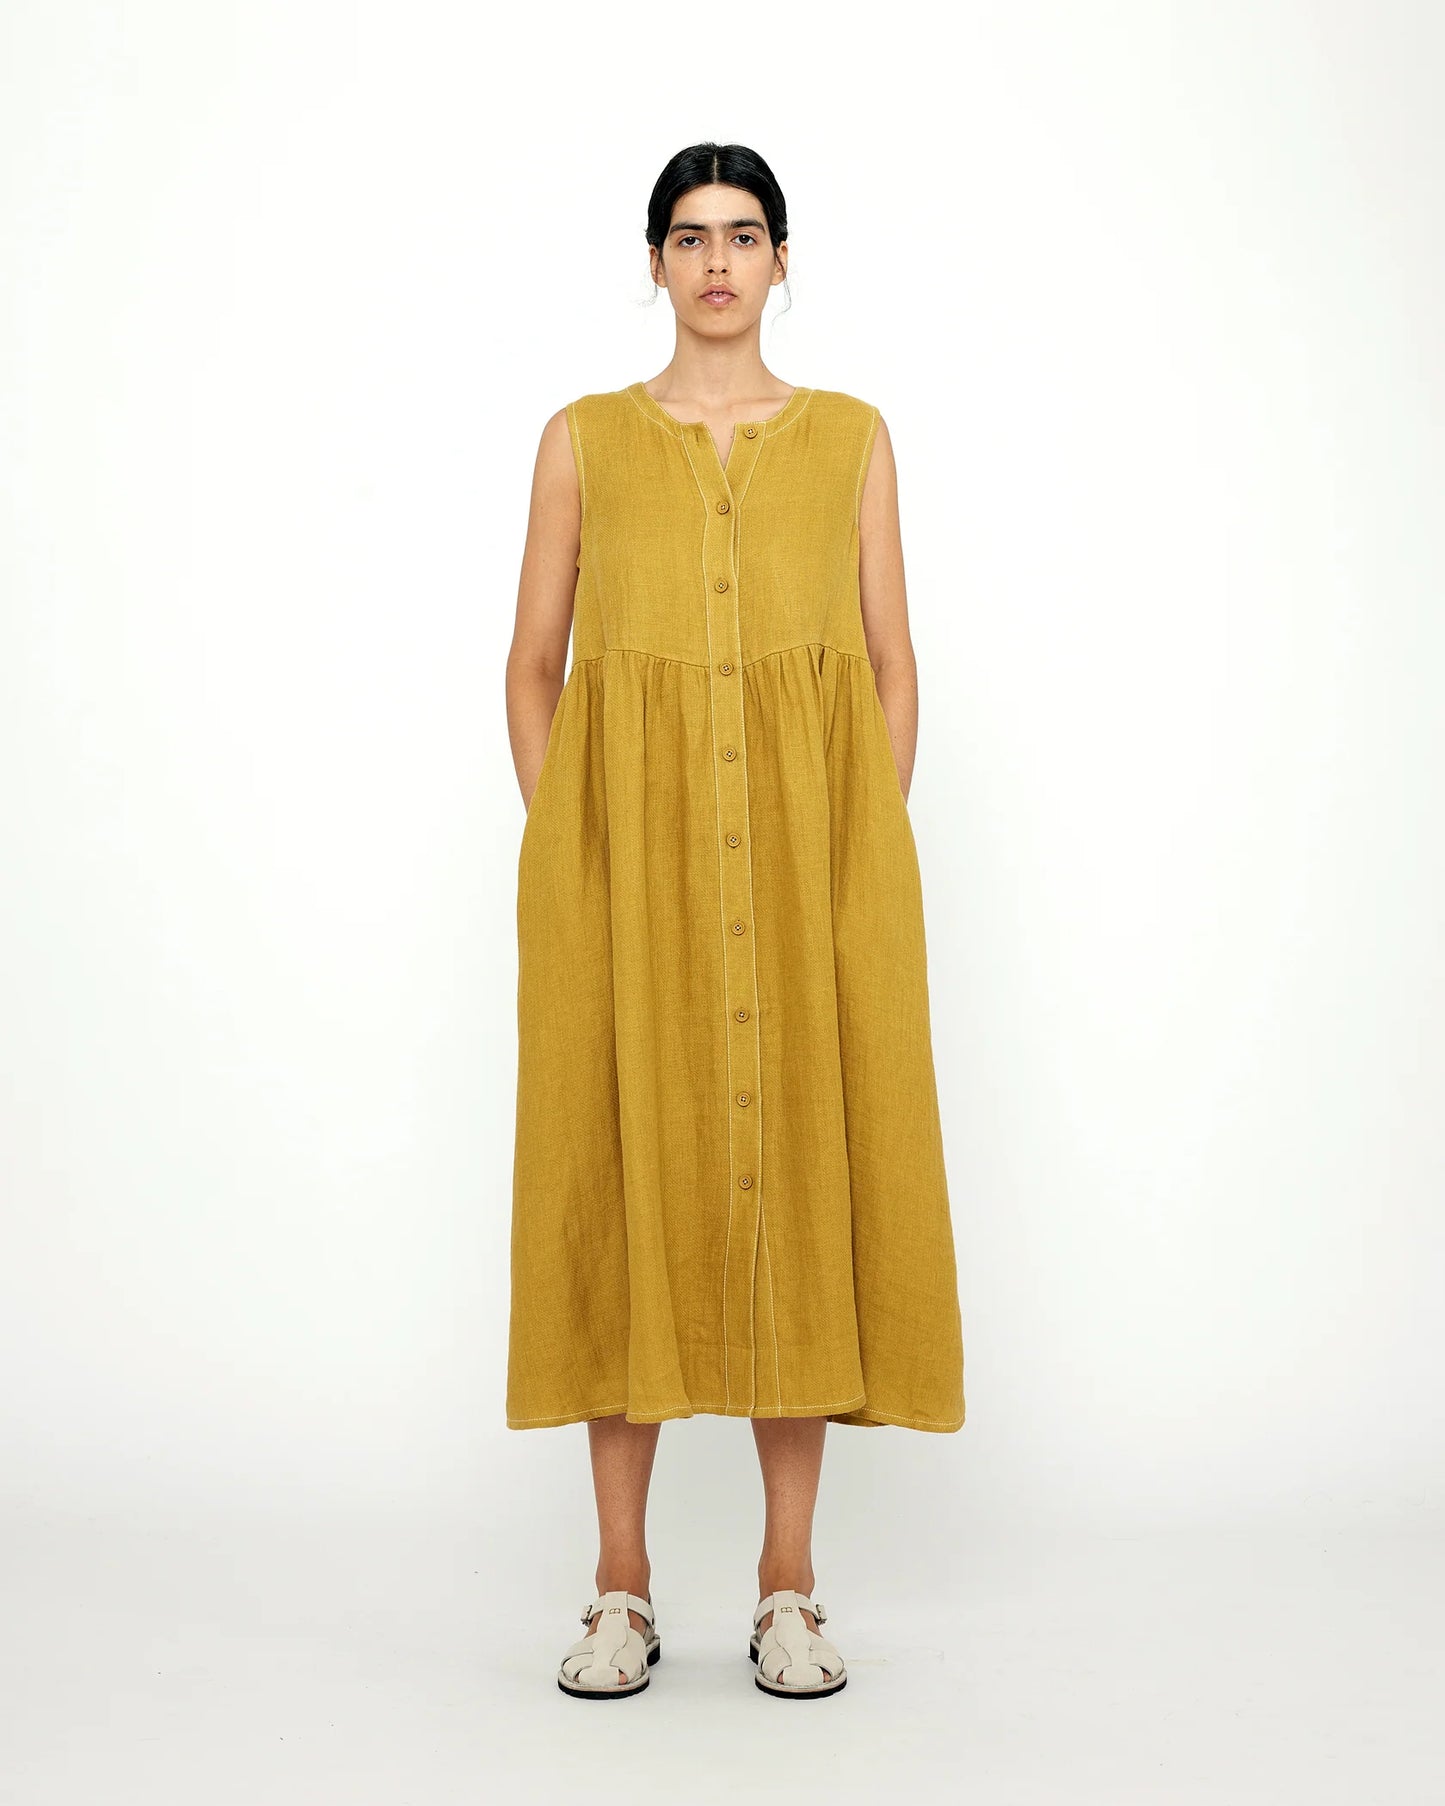 7115 by Szeki Summer Play Dress - Mustard